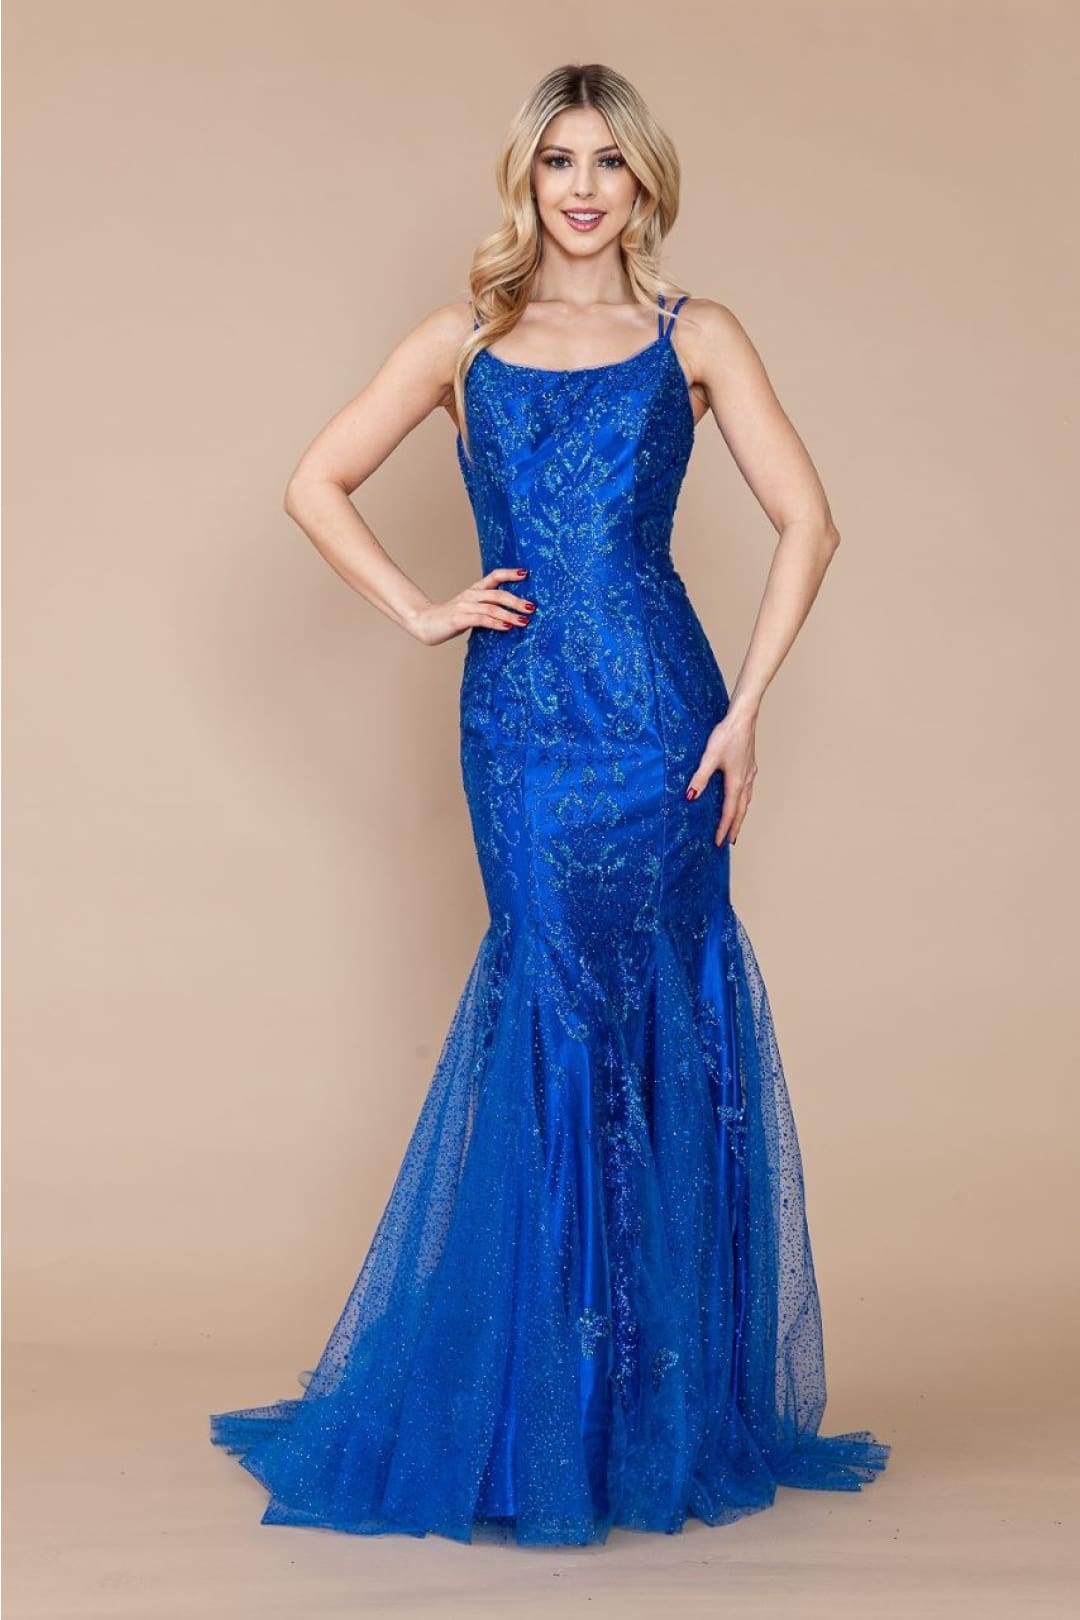 Poly USA 9306 Double Spaghetti Strap Glitter Print Mermaid Prom Gown - ROYAL / XS Dress